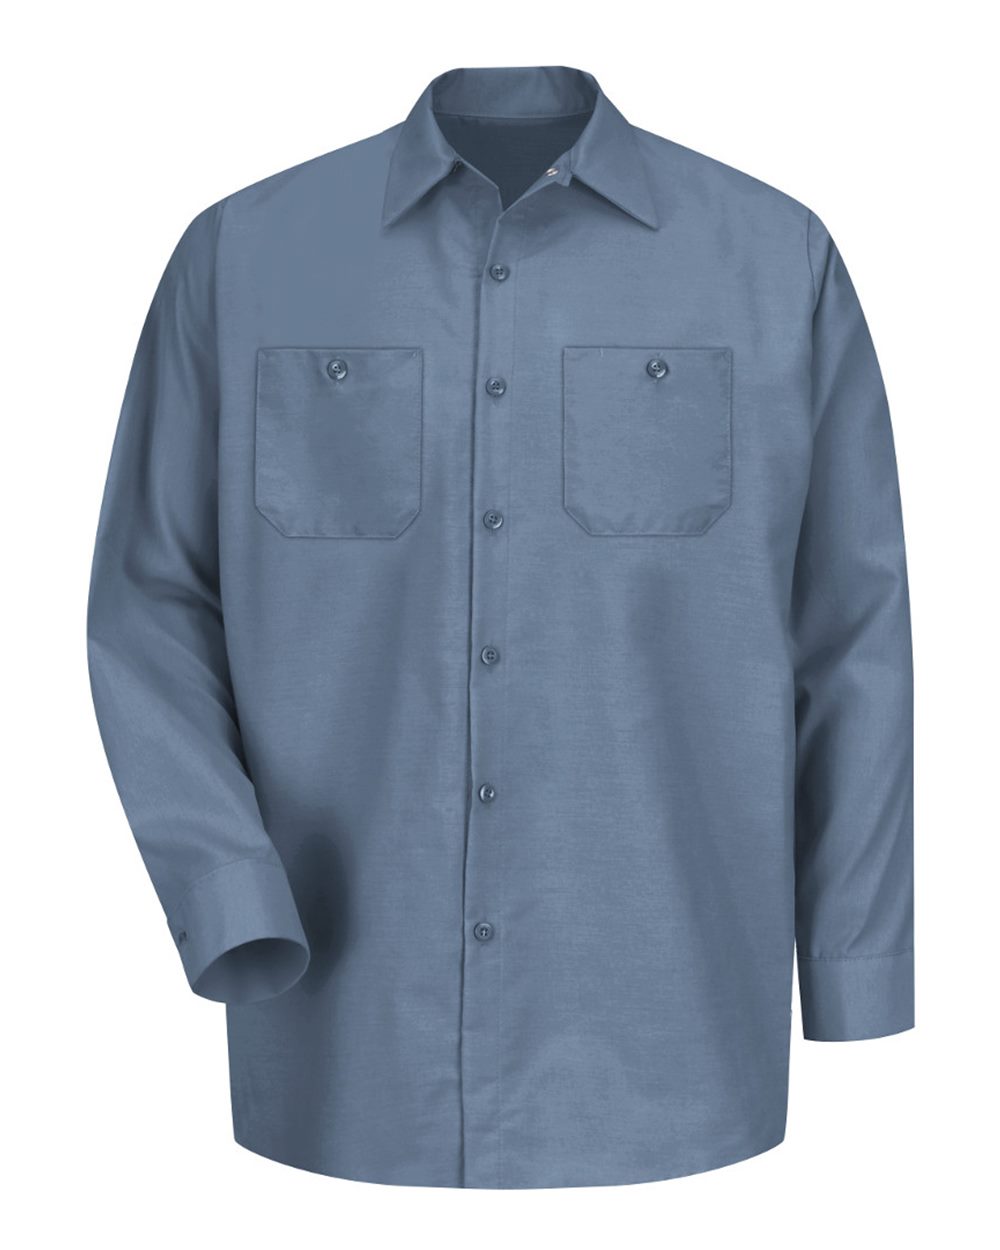 44130  Industrial Long Sleeve Work Shirt - SP14